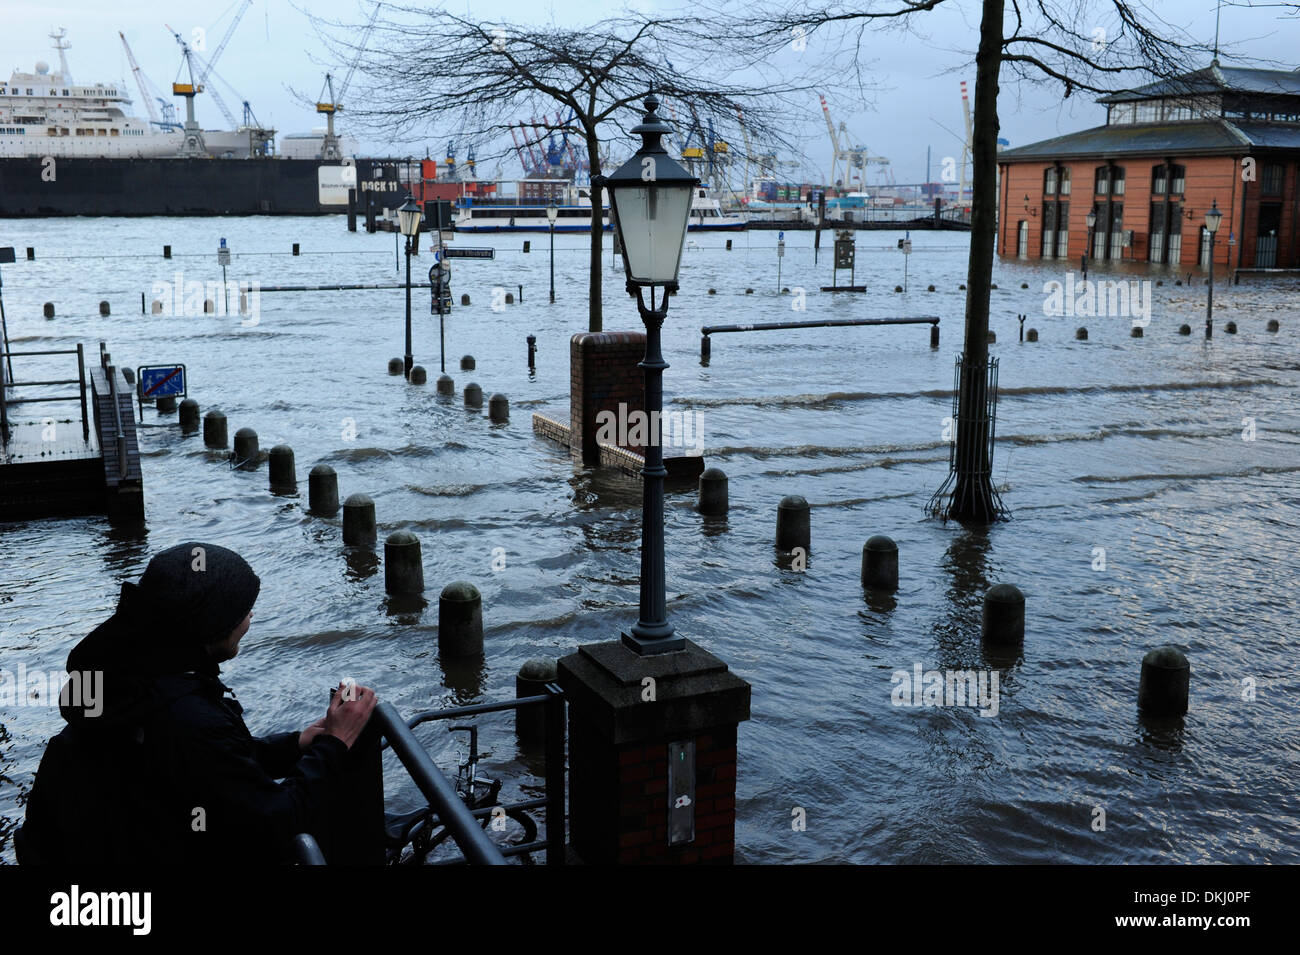 GERMANY Hamburg, storm flood Xaver, flood at river Elbe, fish market on 6.12.2013 Stock Photo